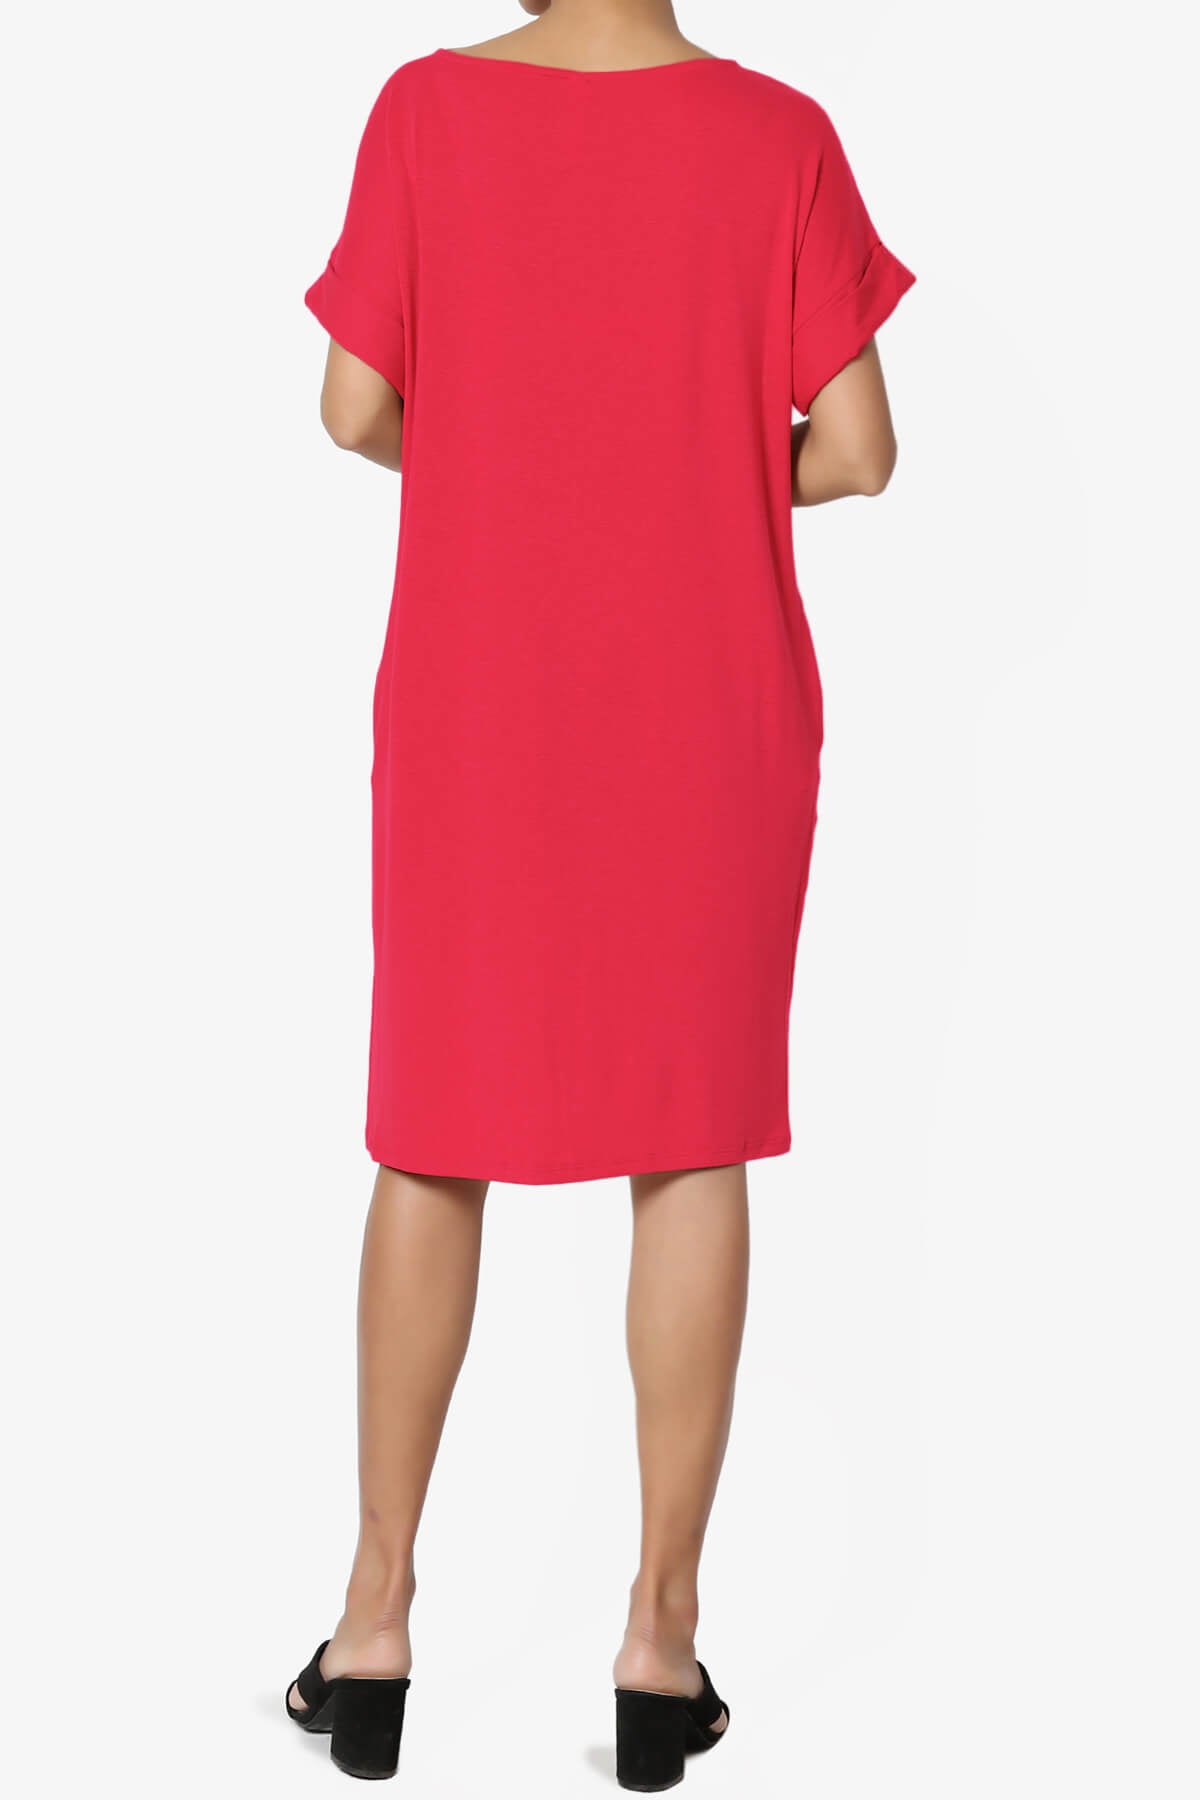 Janie Rolled Short Sleeve Round Neck Dress RED_2